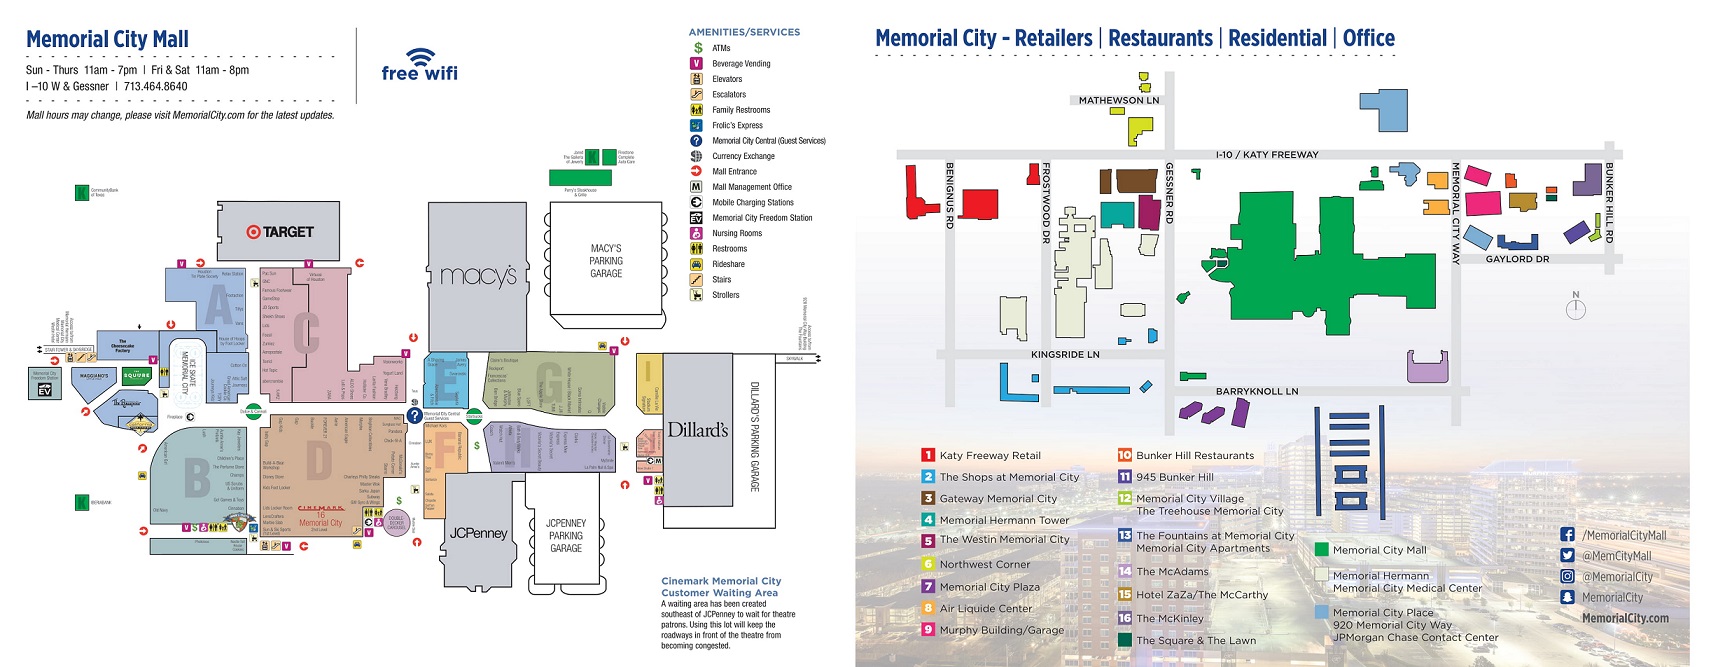 Memorial City Mall (237 stores) shopping in Houston, Texas TX 77024